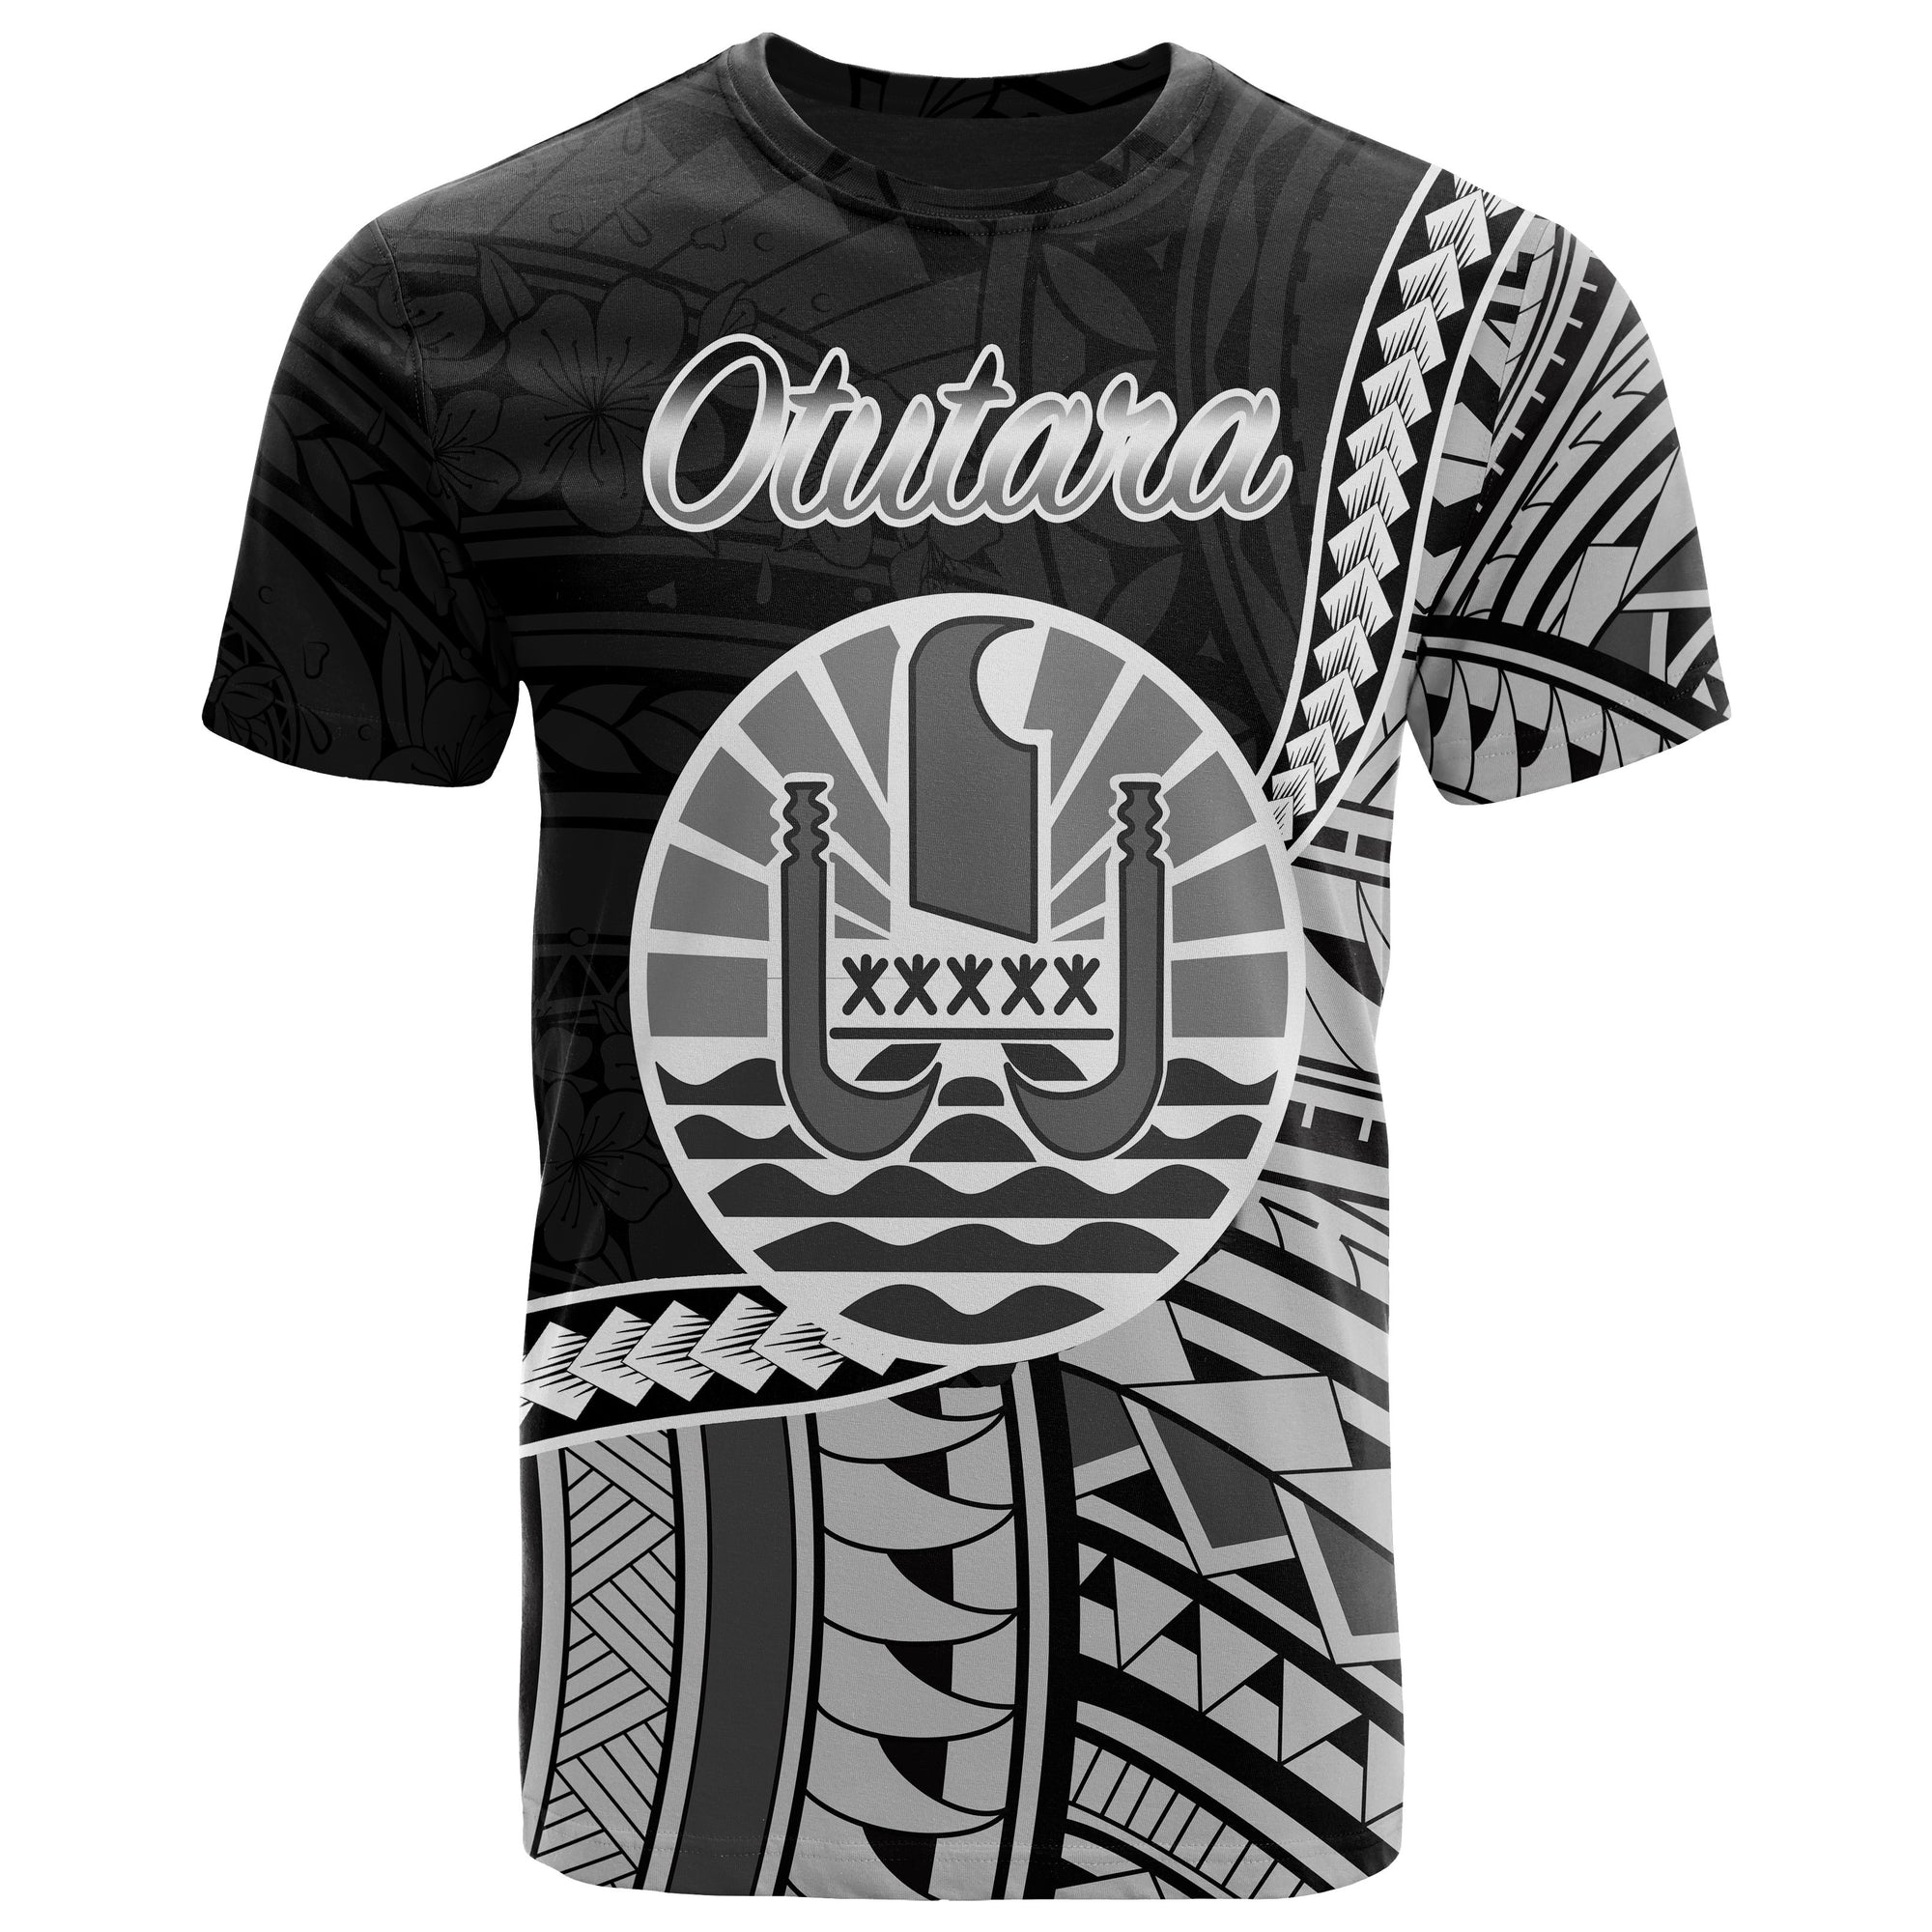 French Polynesia T Shirt Otutara Seal of French Polynesia Polynesian Patterns Unisex Black - Polynesian Pride